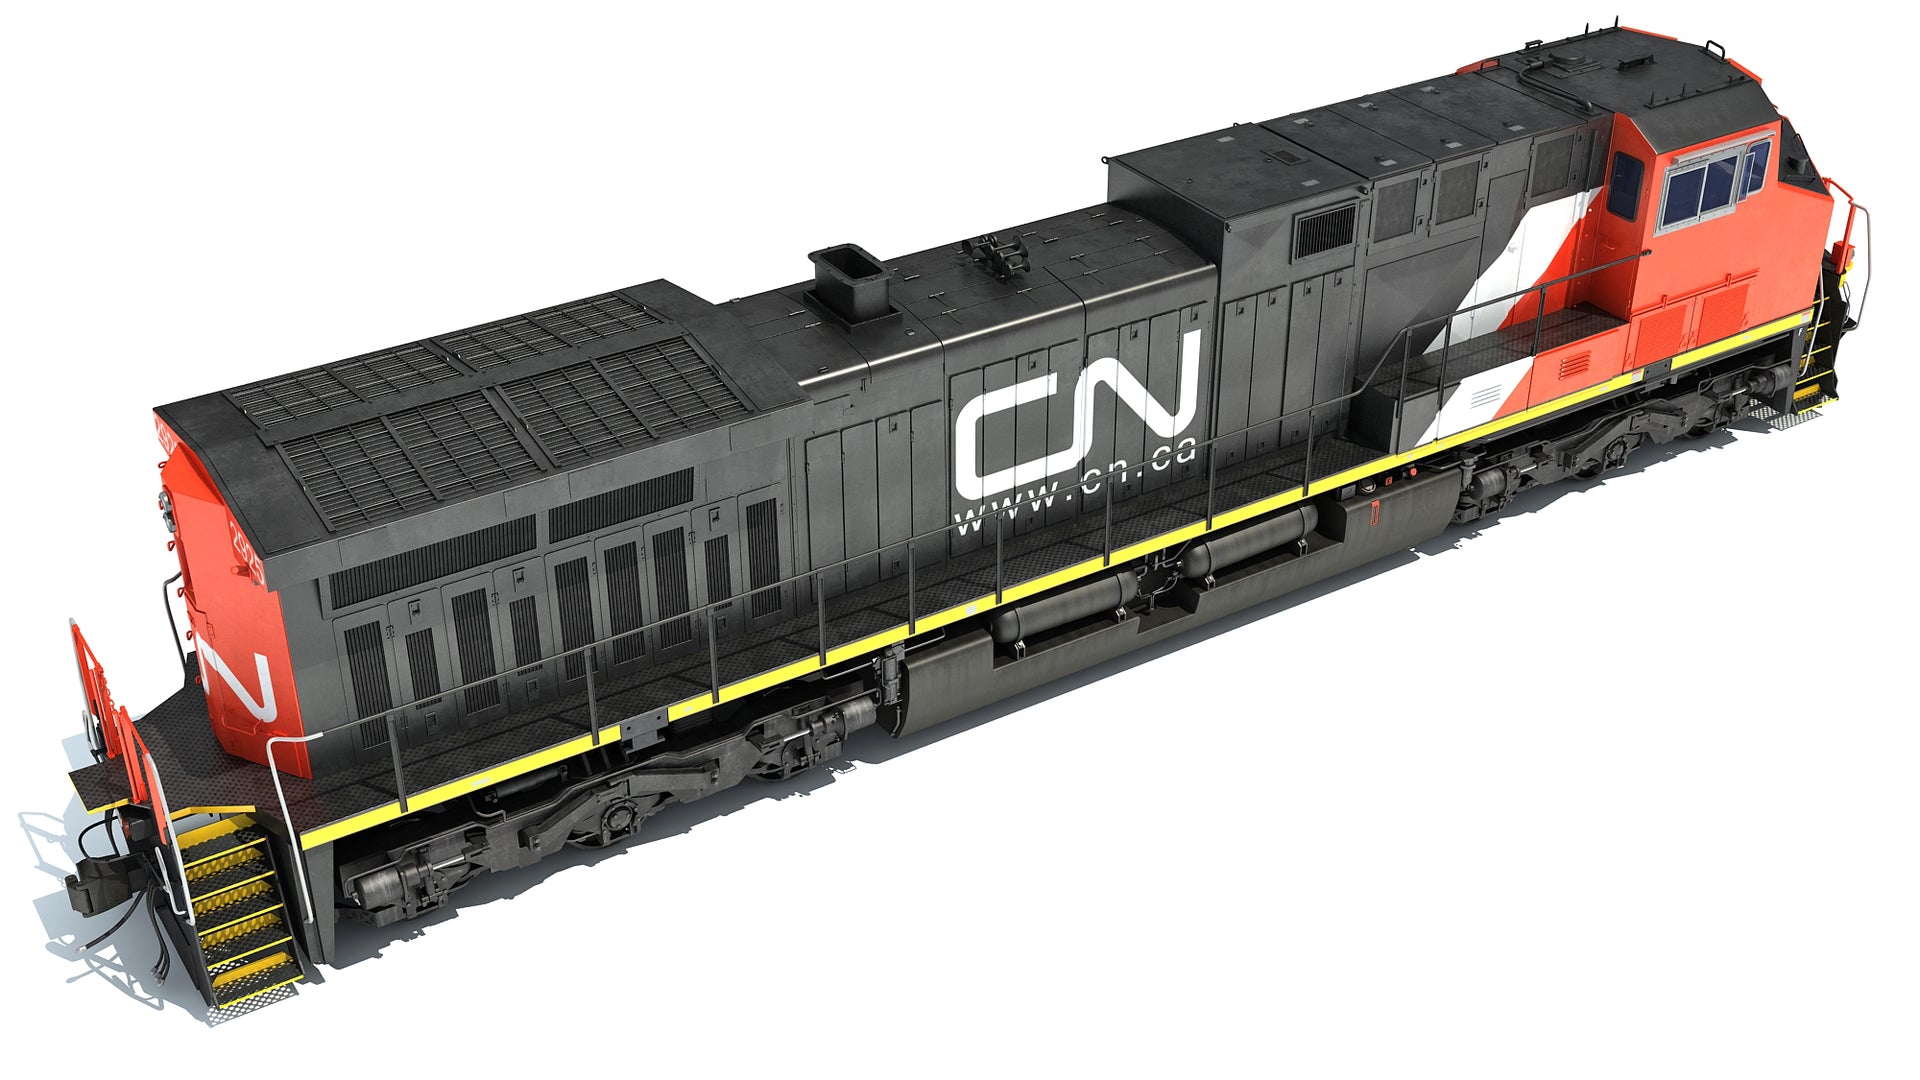 Locomotive Canadian National Railway CN